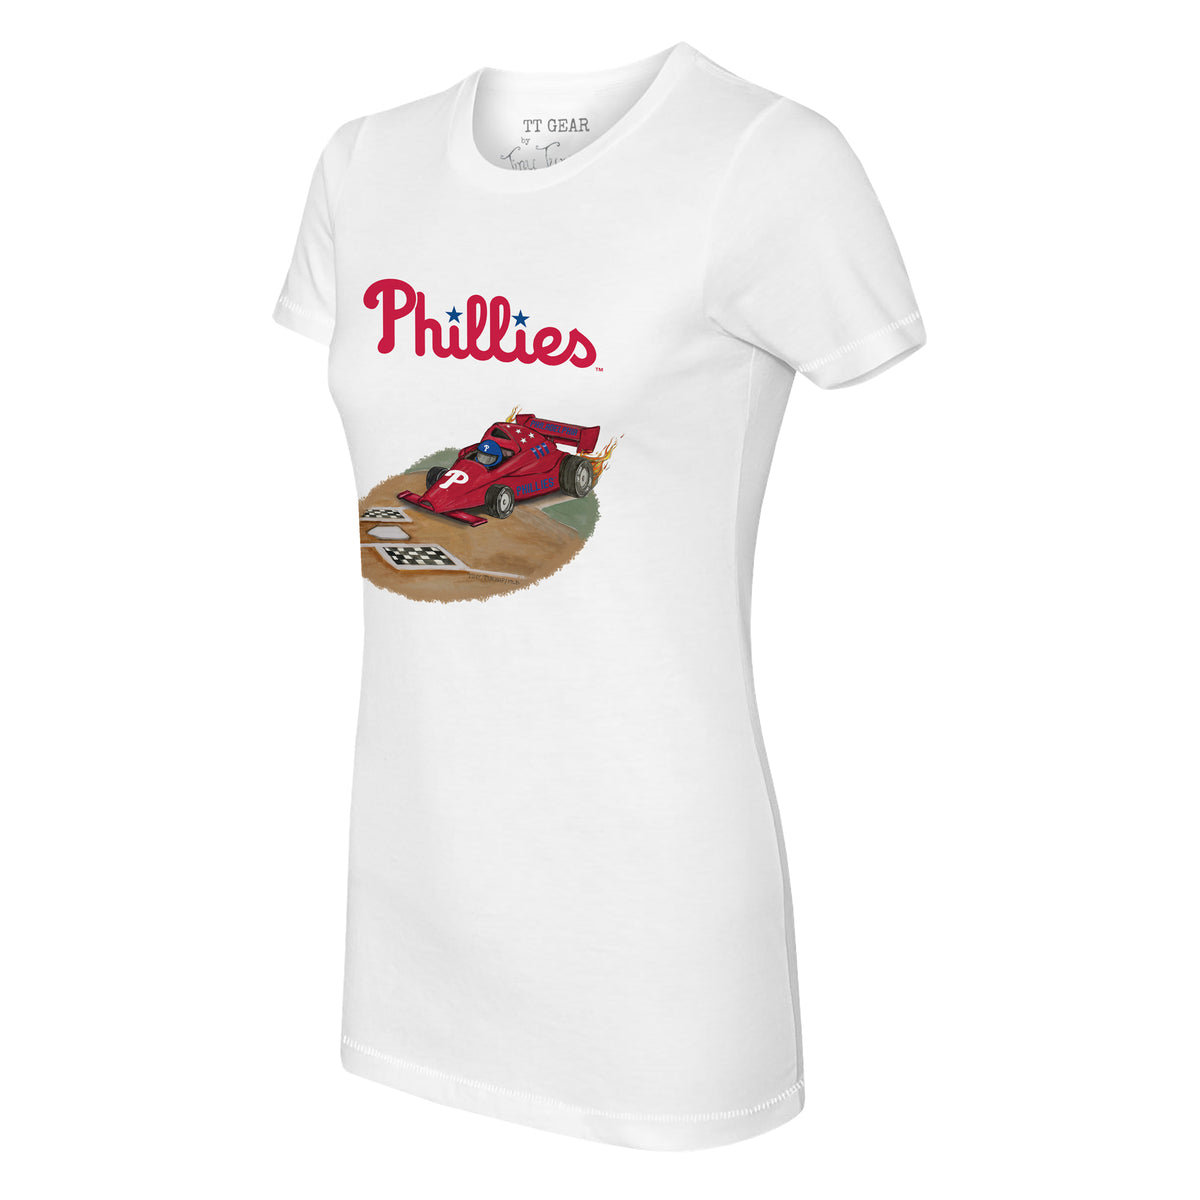 Philadelphia Phillies Race Car Tee Shirt